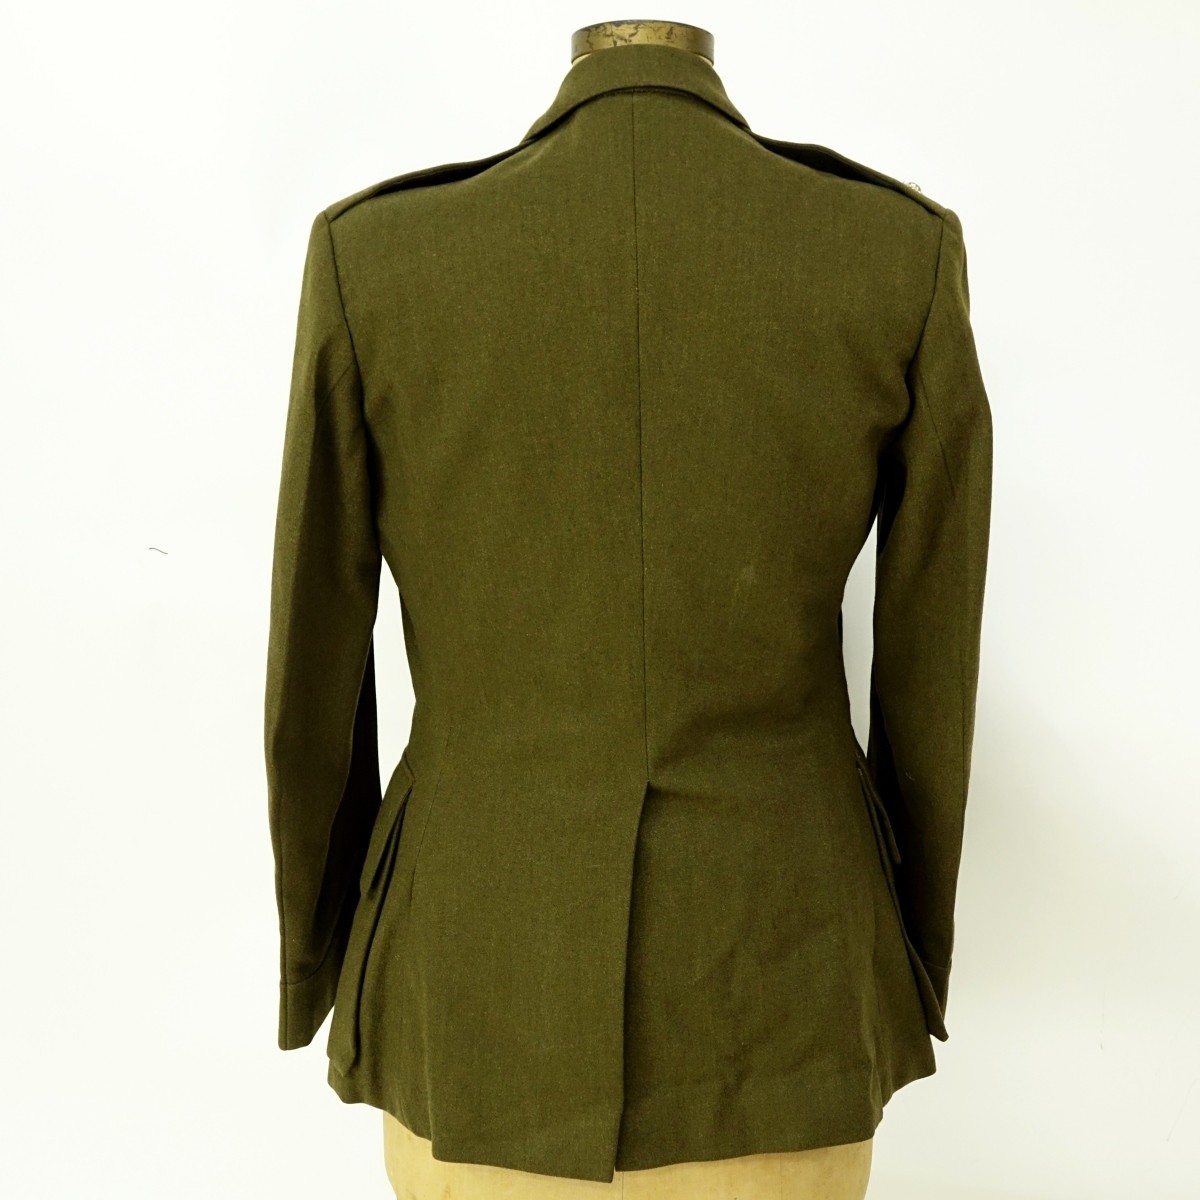 Vintage British Army Green Military Coat.